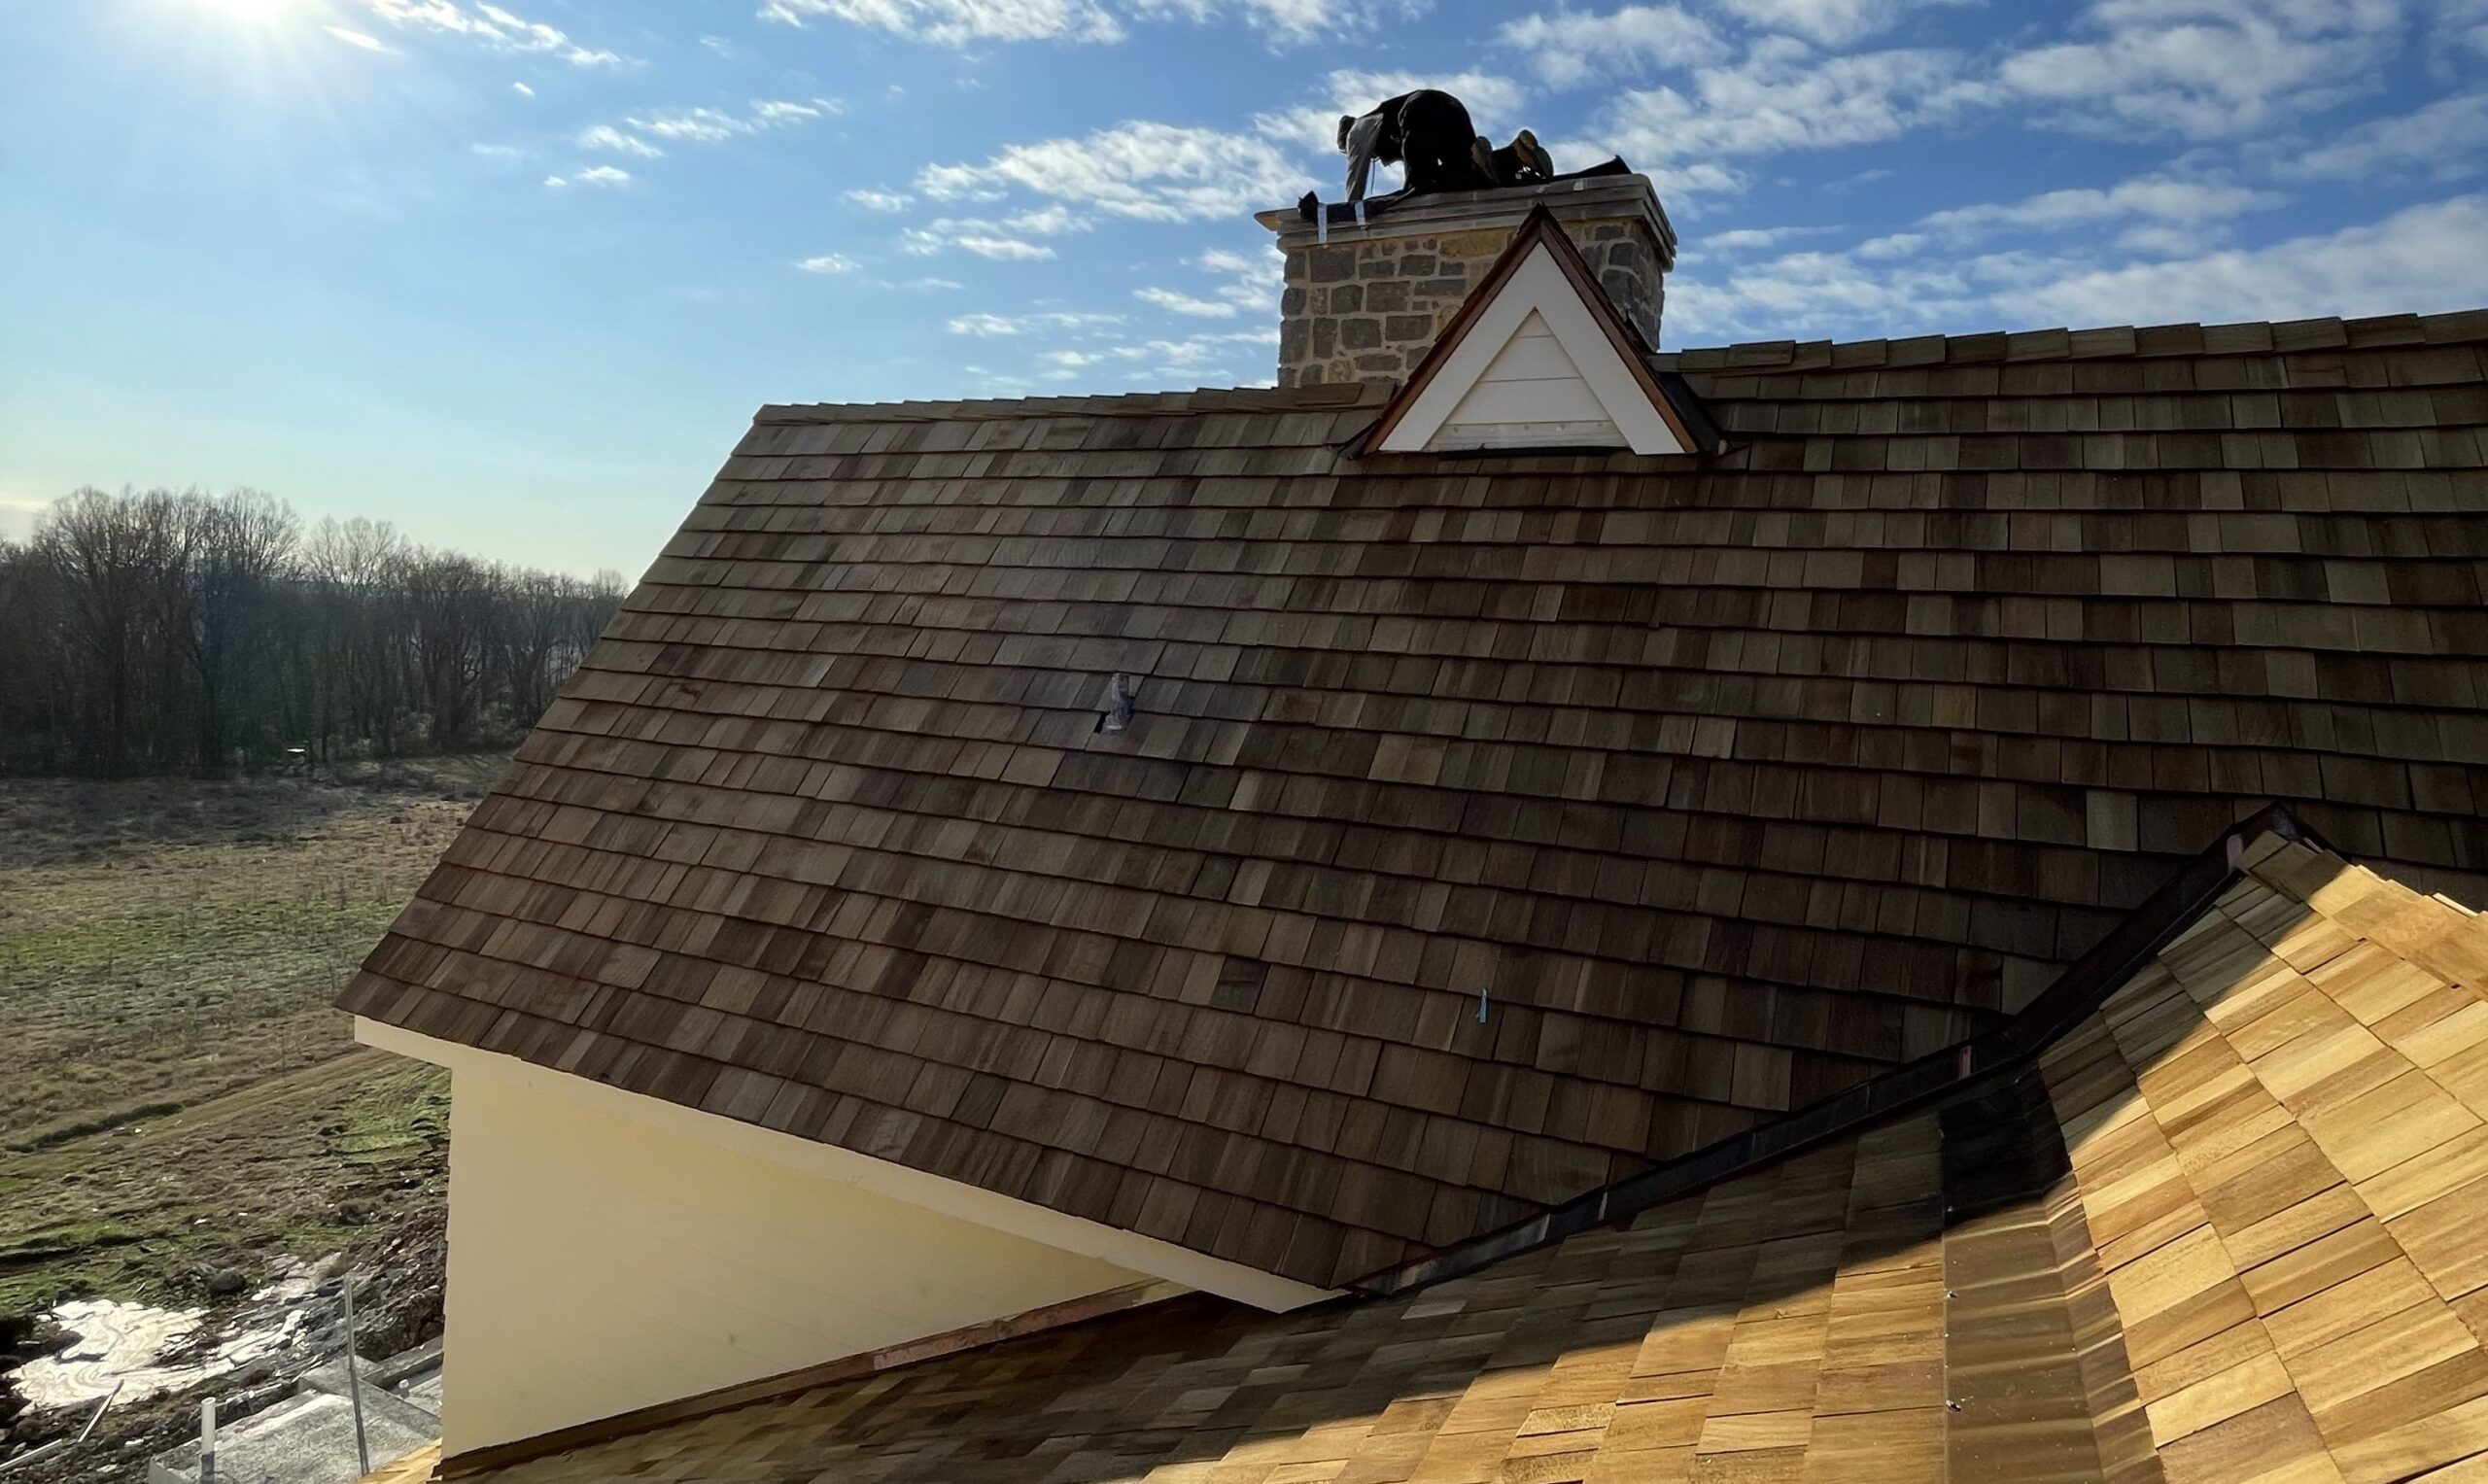 Man inspecting Roof near chimney